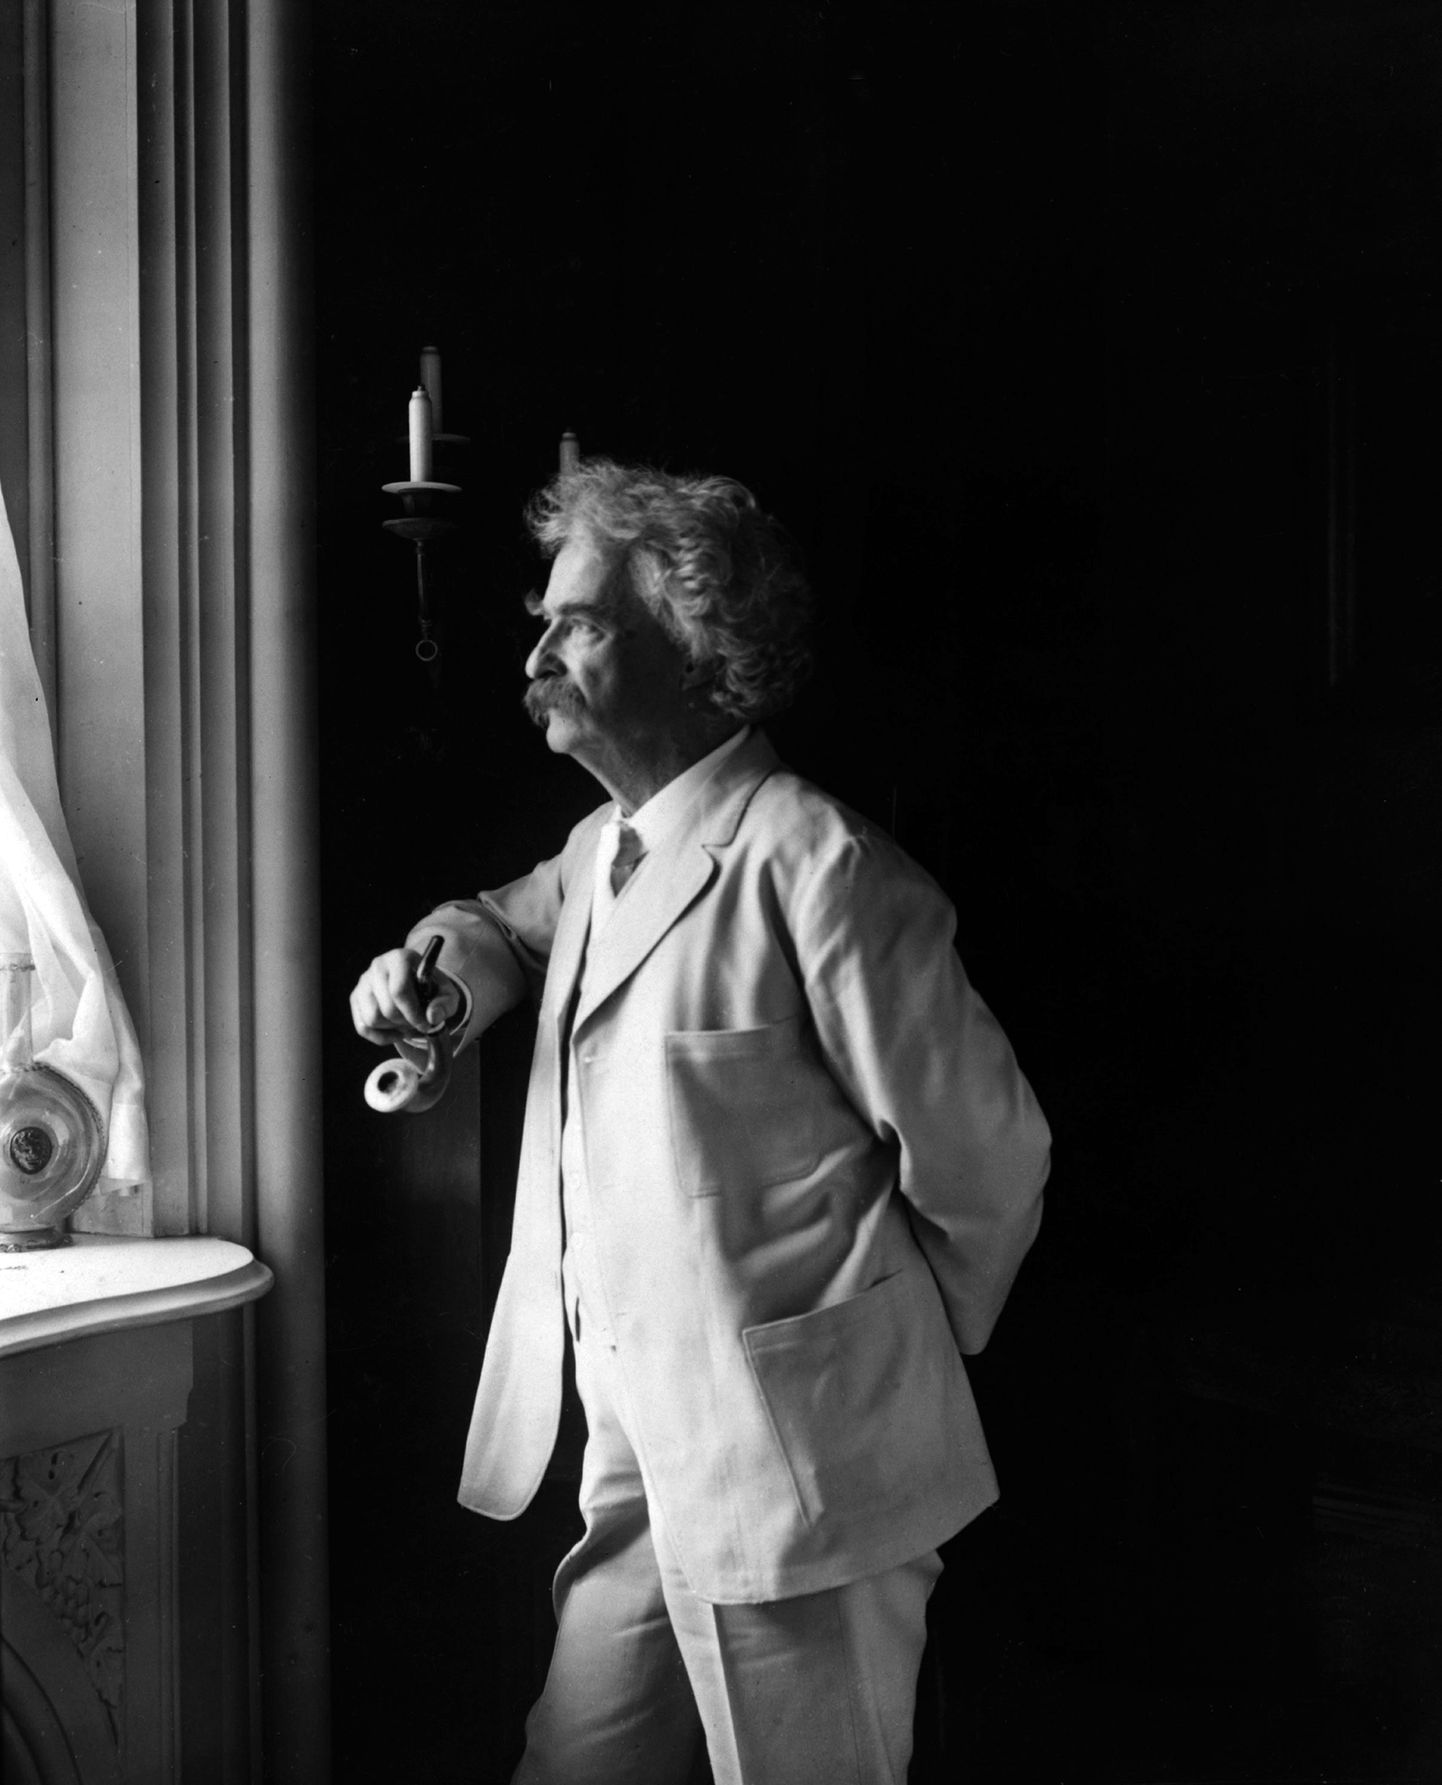 Mark Twain (Samuel L. Clemens, 1835-1910).